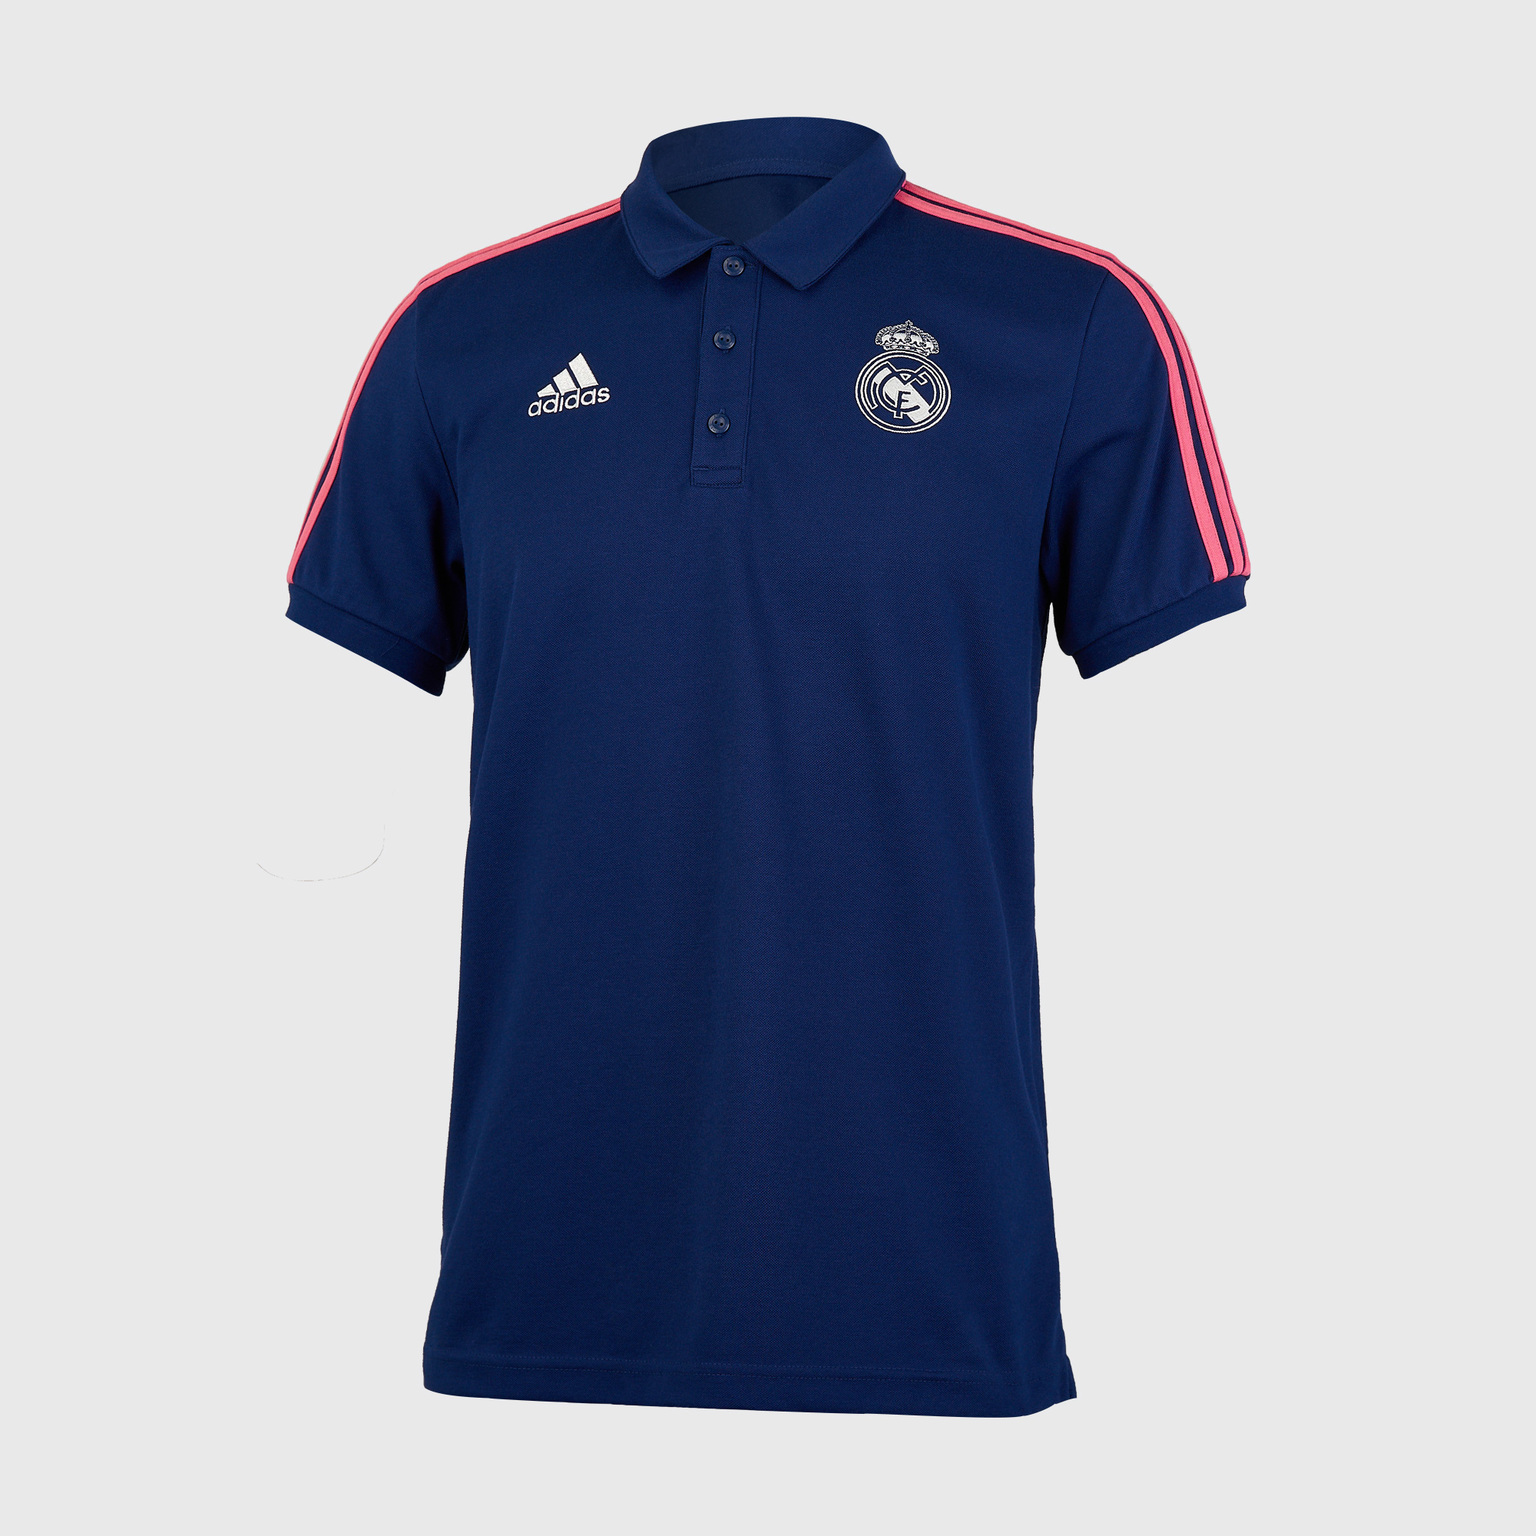 Поло Adidas Real Madrid сезон 2020/21